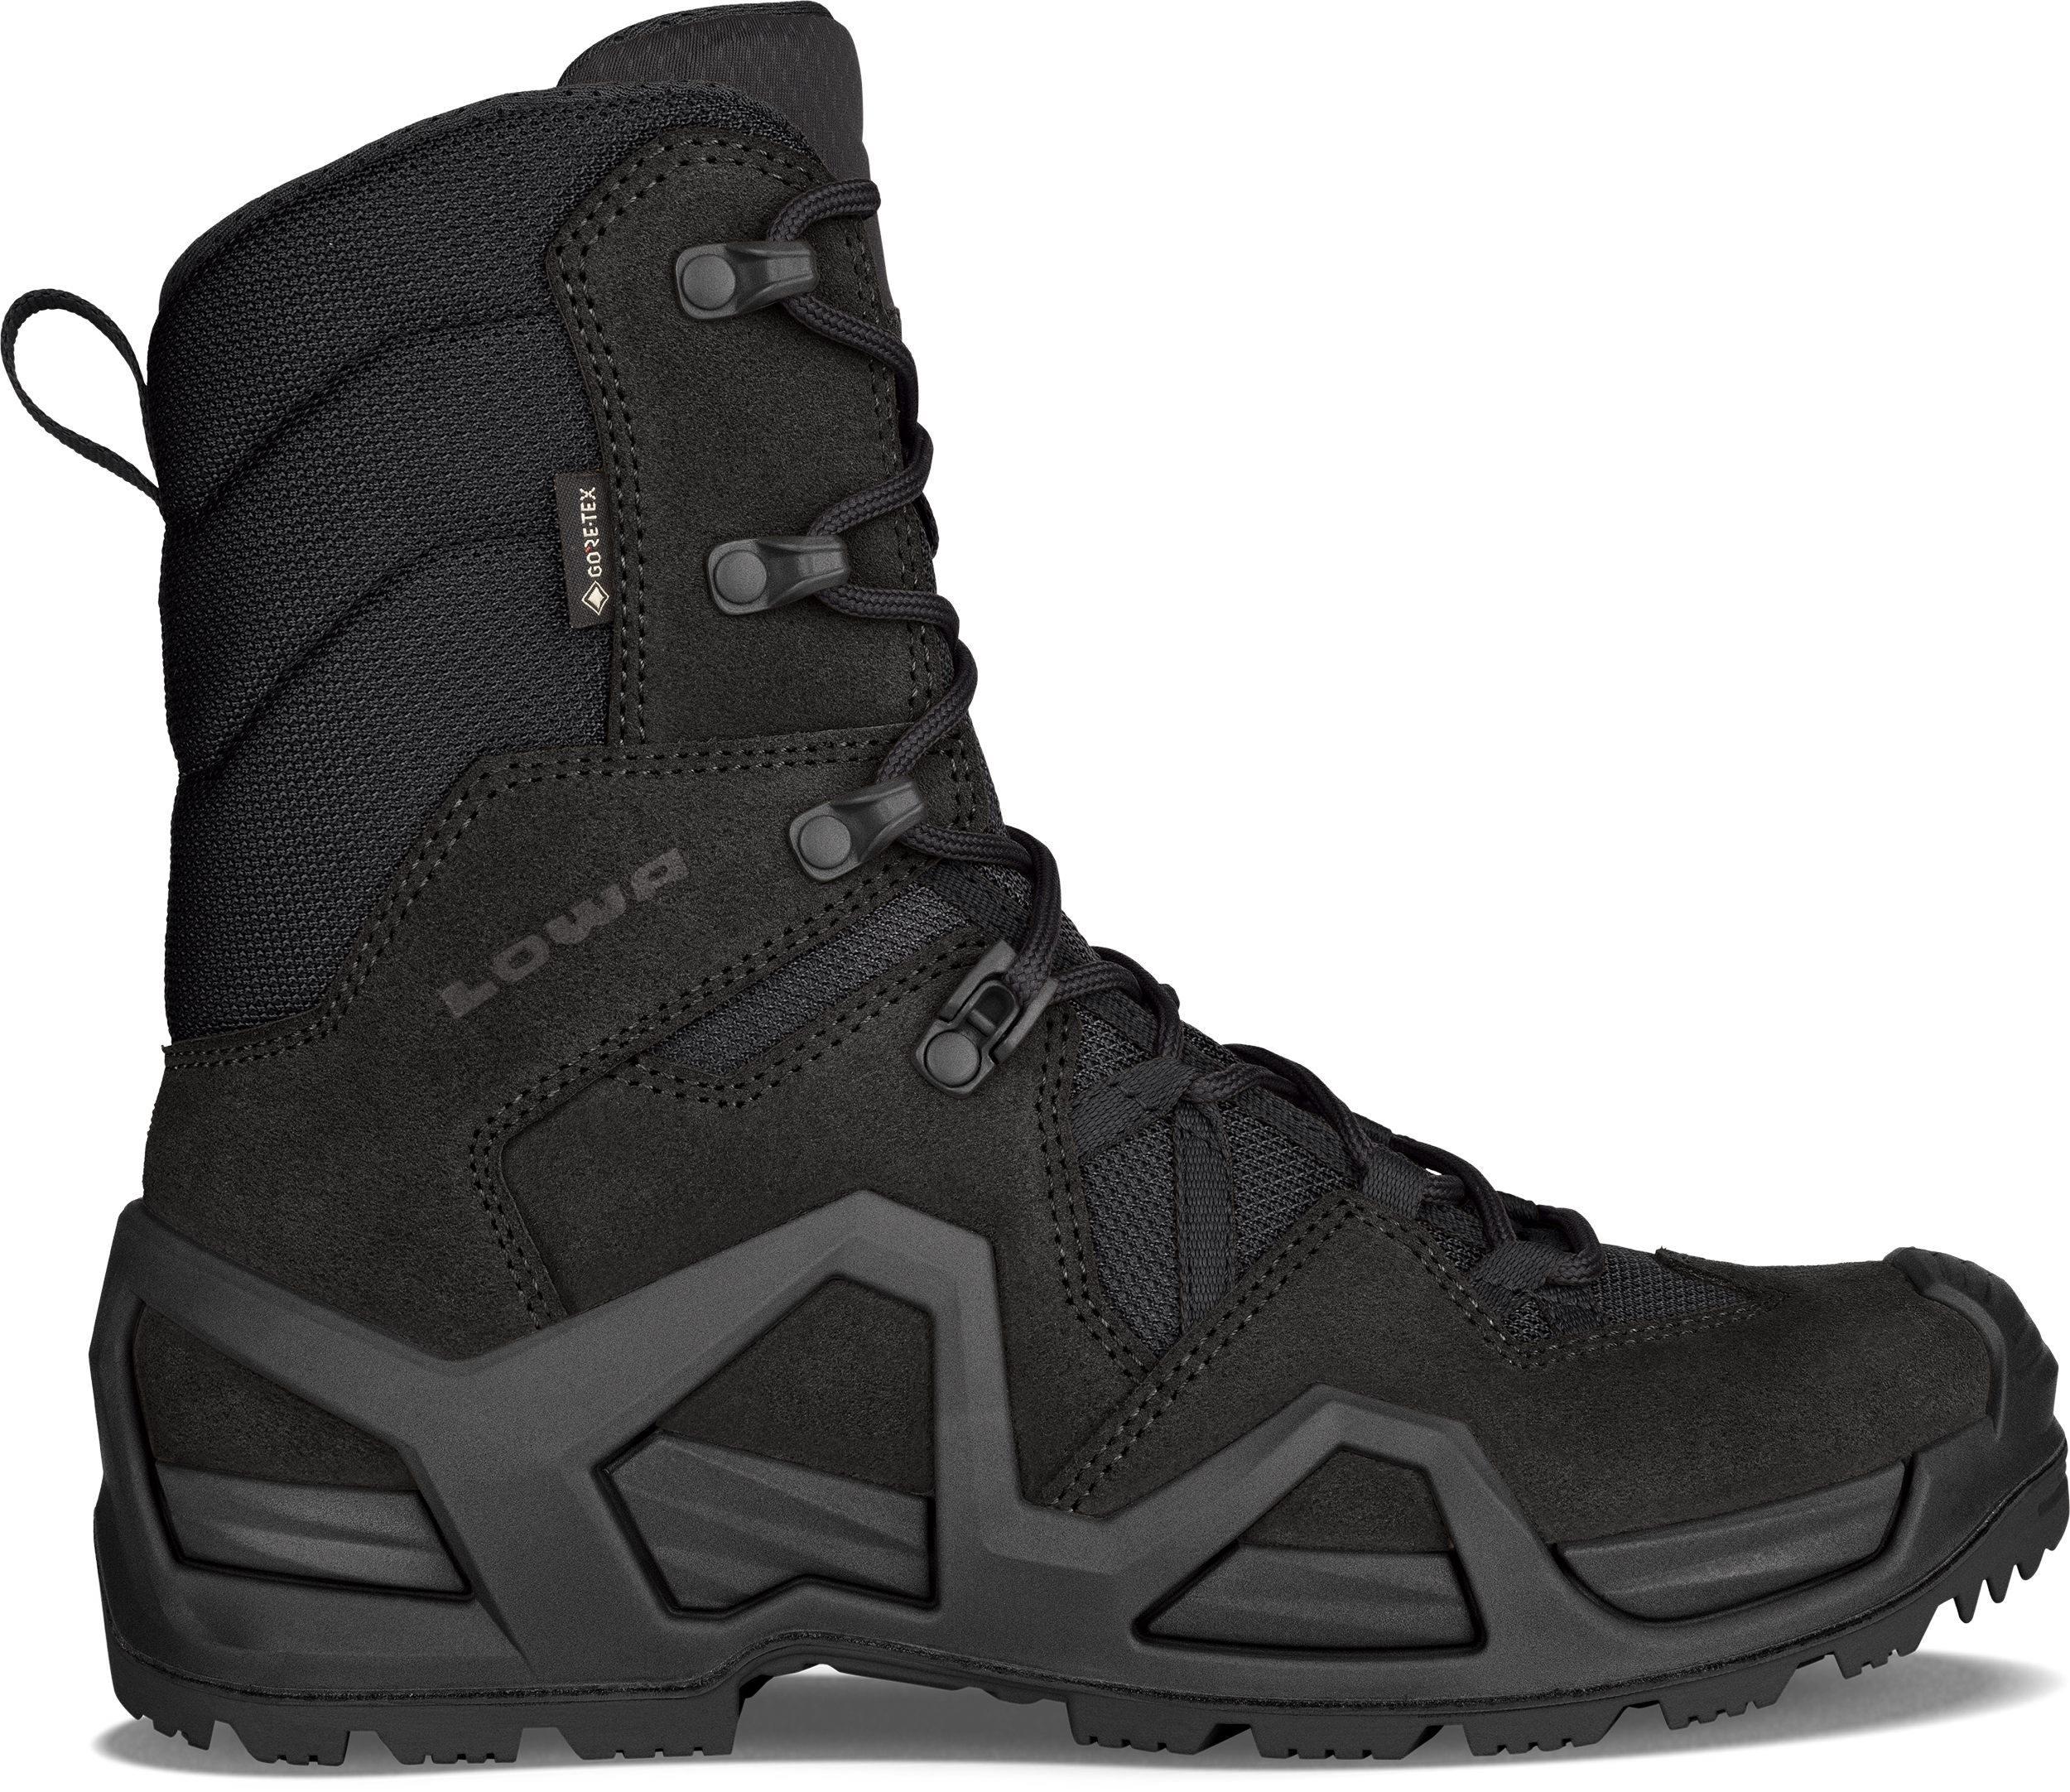 ZEPHYR MK2 GTX HI Ws: TASK FORCE: CLOSE-QUARTERS COMBAT Shoes for 